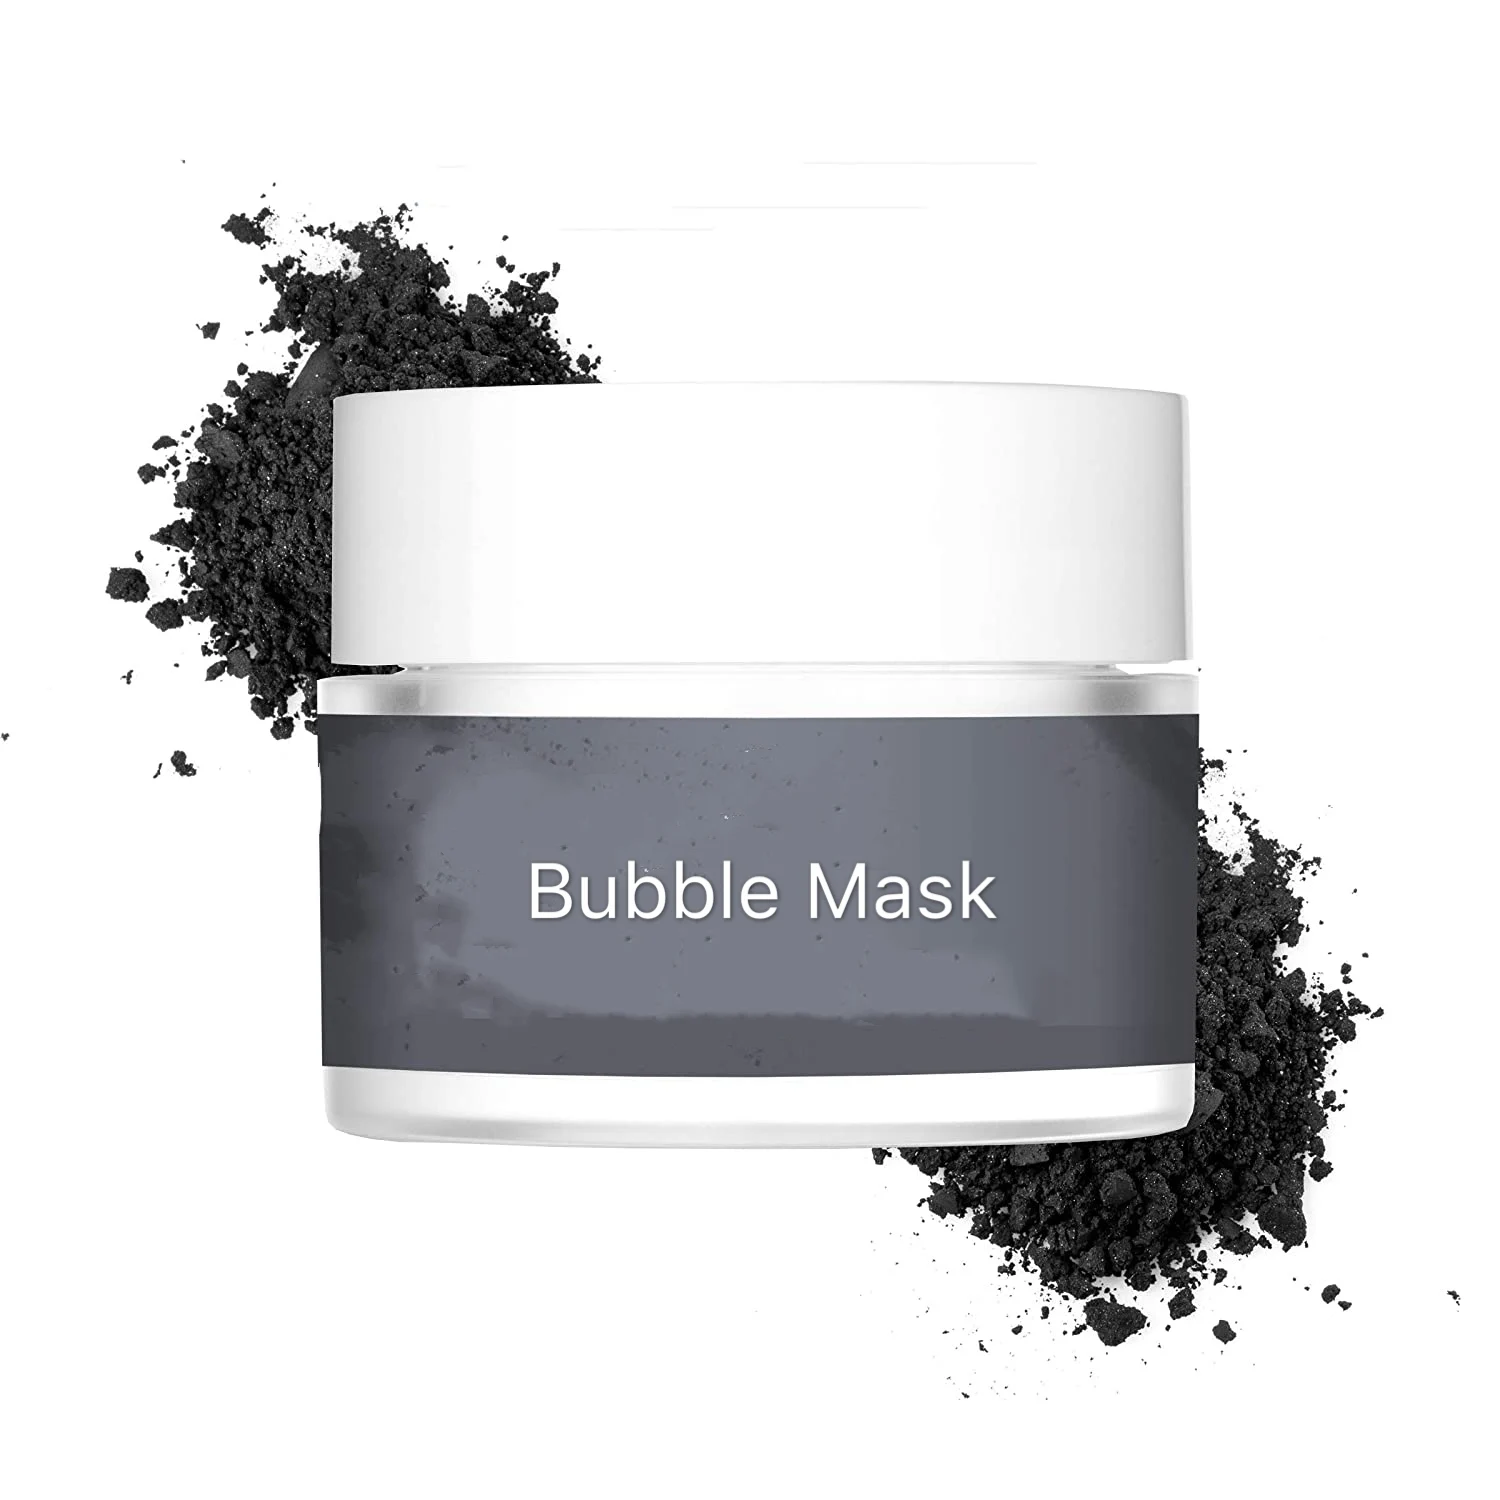 Glow clean activated. Маска Deep Detox. Detox activated Charcoal. Маска Bubble Mud. Charcoal маска.